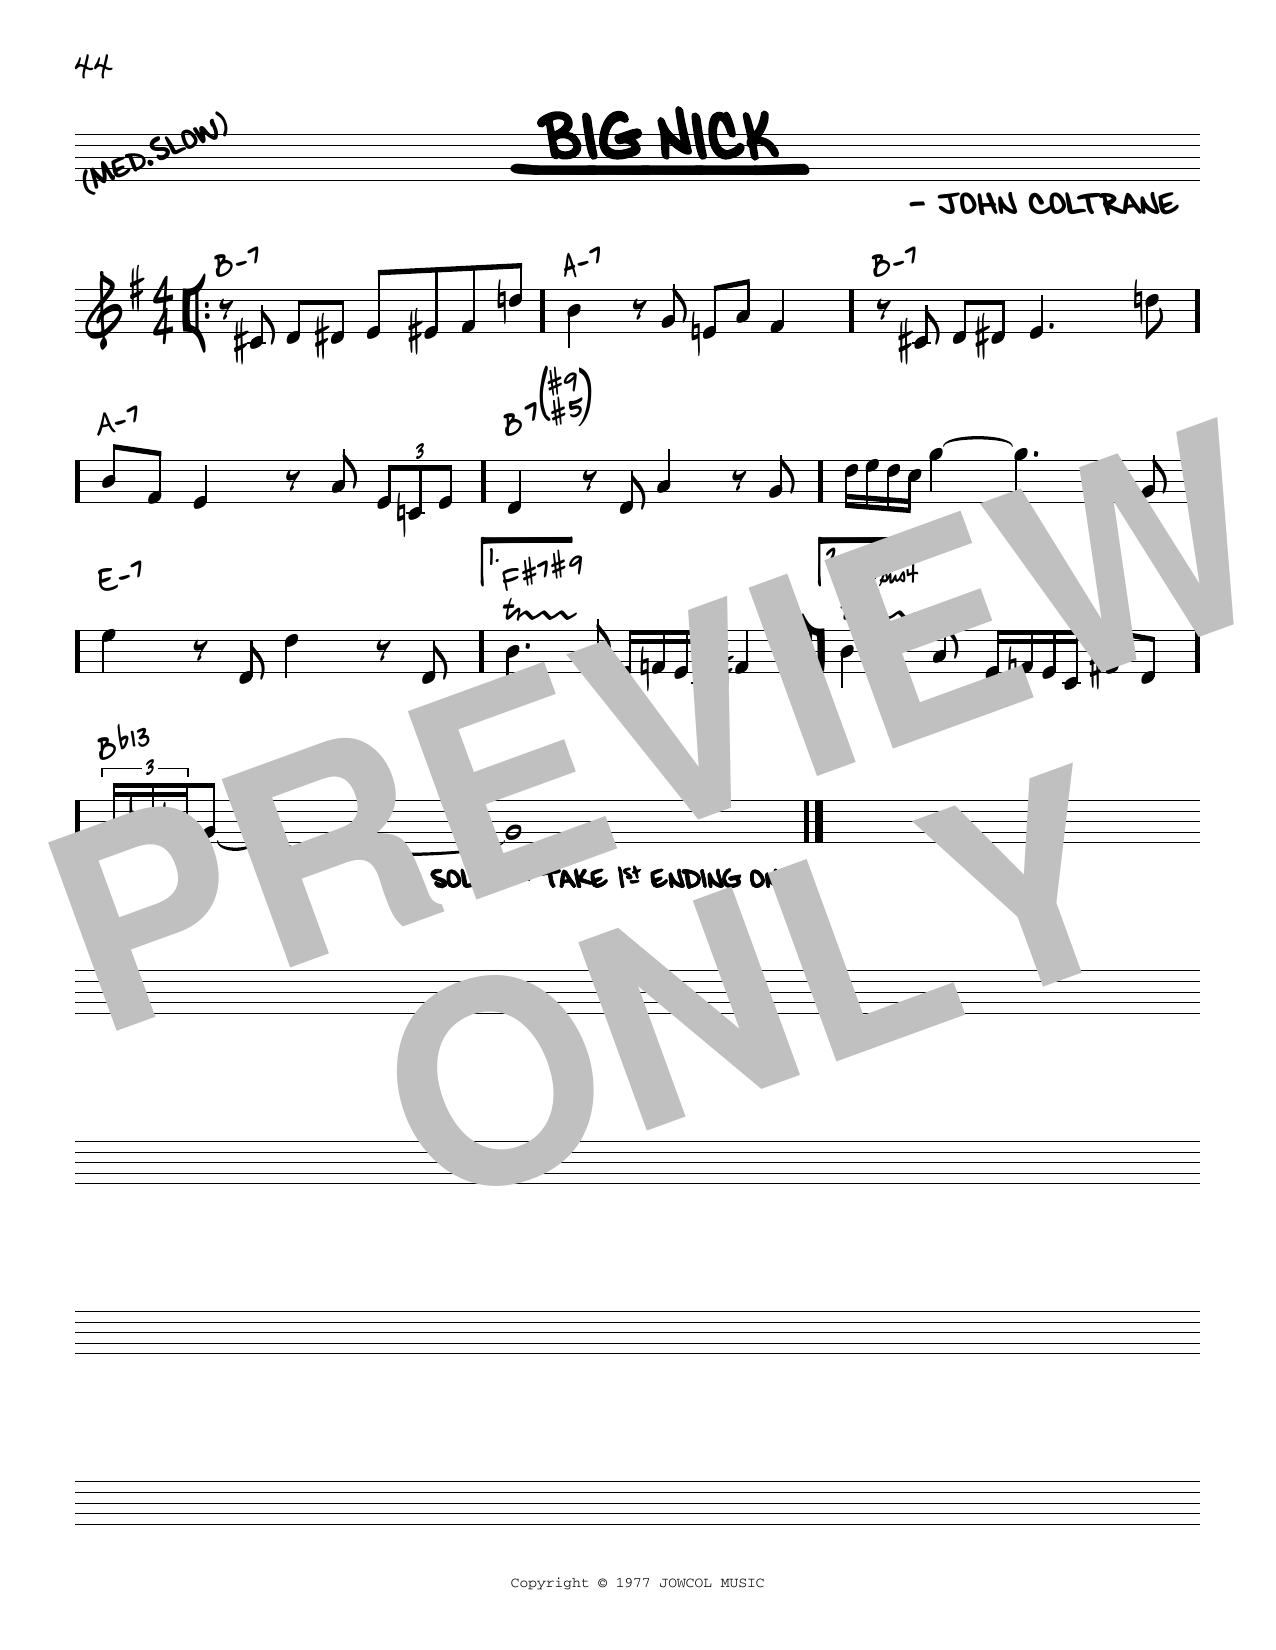 John Coltrane Big Nick [Reharmonized version] (arr. Jack Grassel) Sheet Music Notes & Chords for Real Book – Melody & Chords - Download or Print PDF